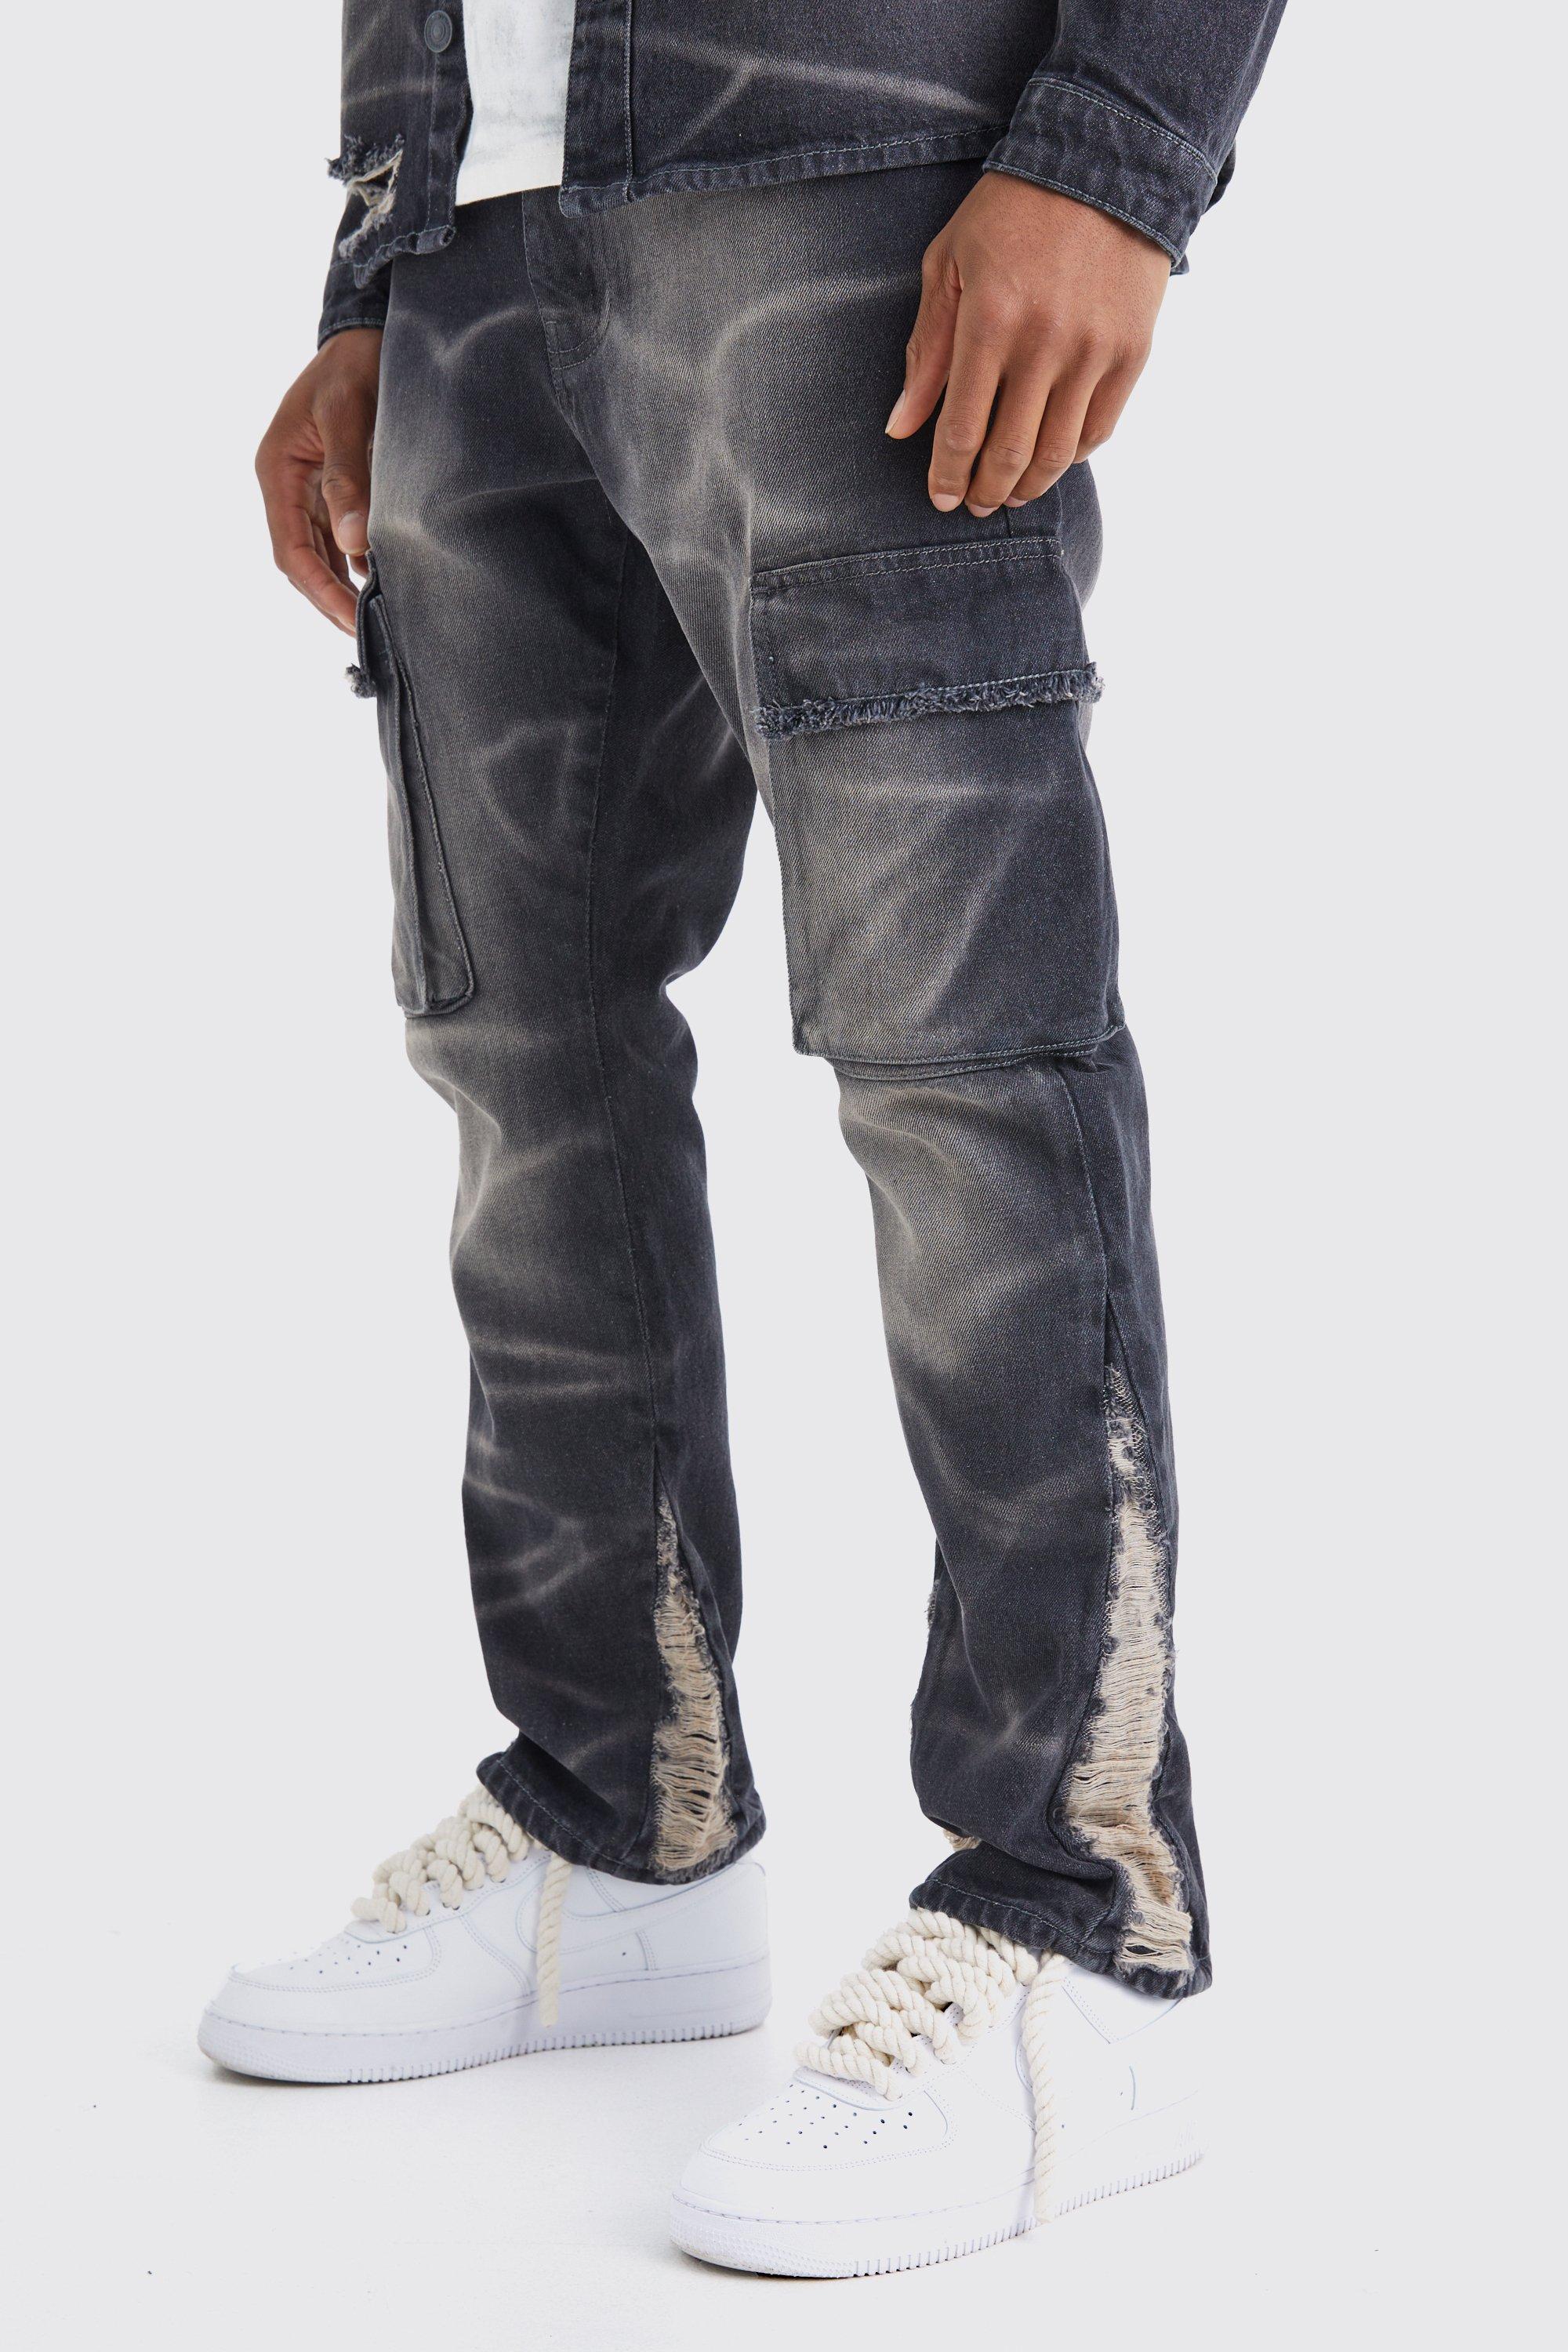 Boohoo Onbewerkte Overdye Versleten Cargo Flared Slim Fit Jeans, Black